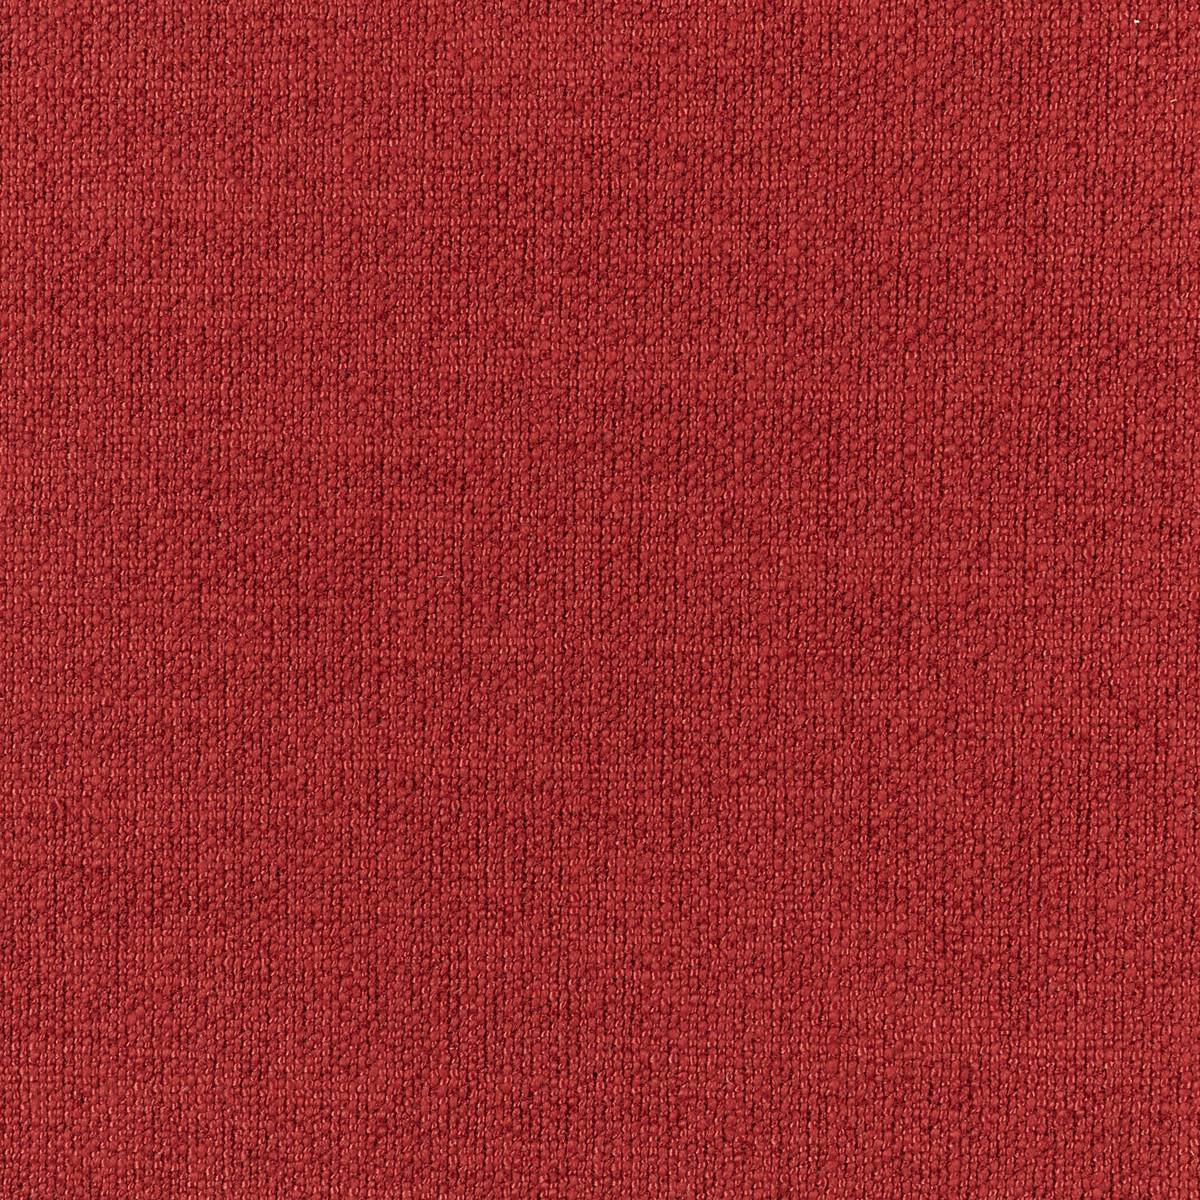 Subject Poppy Fabric by Harlequin